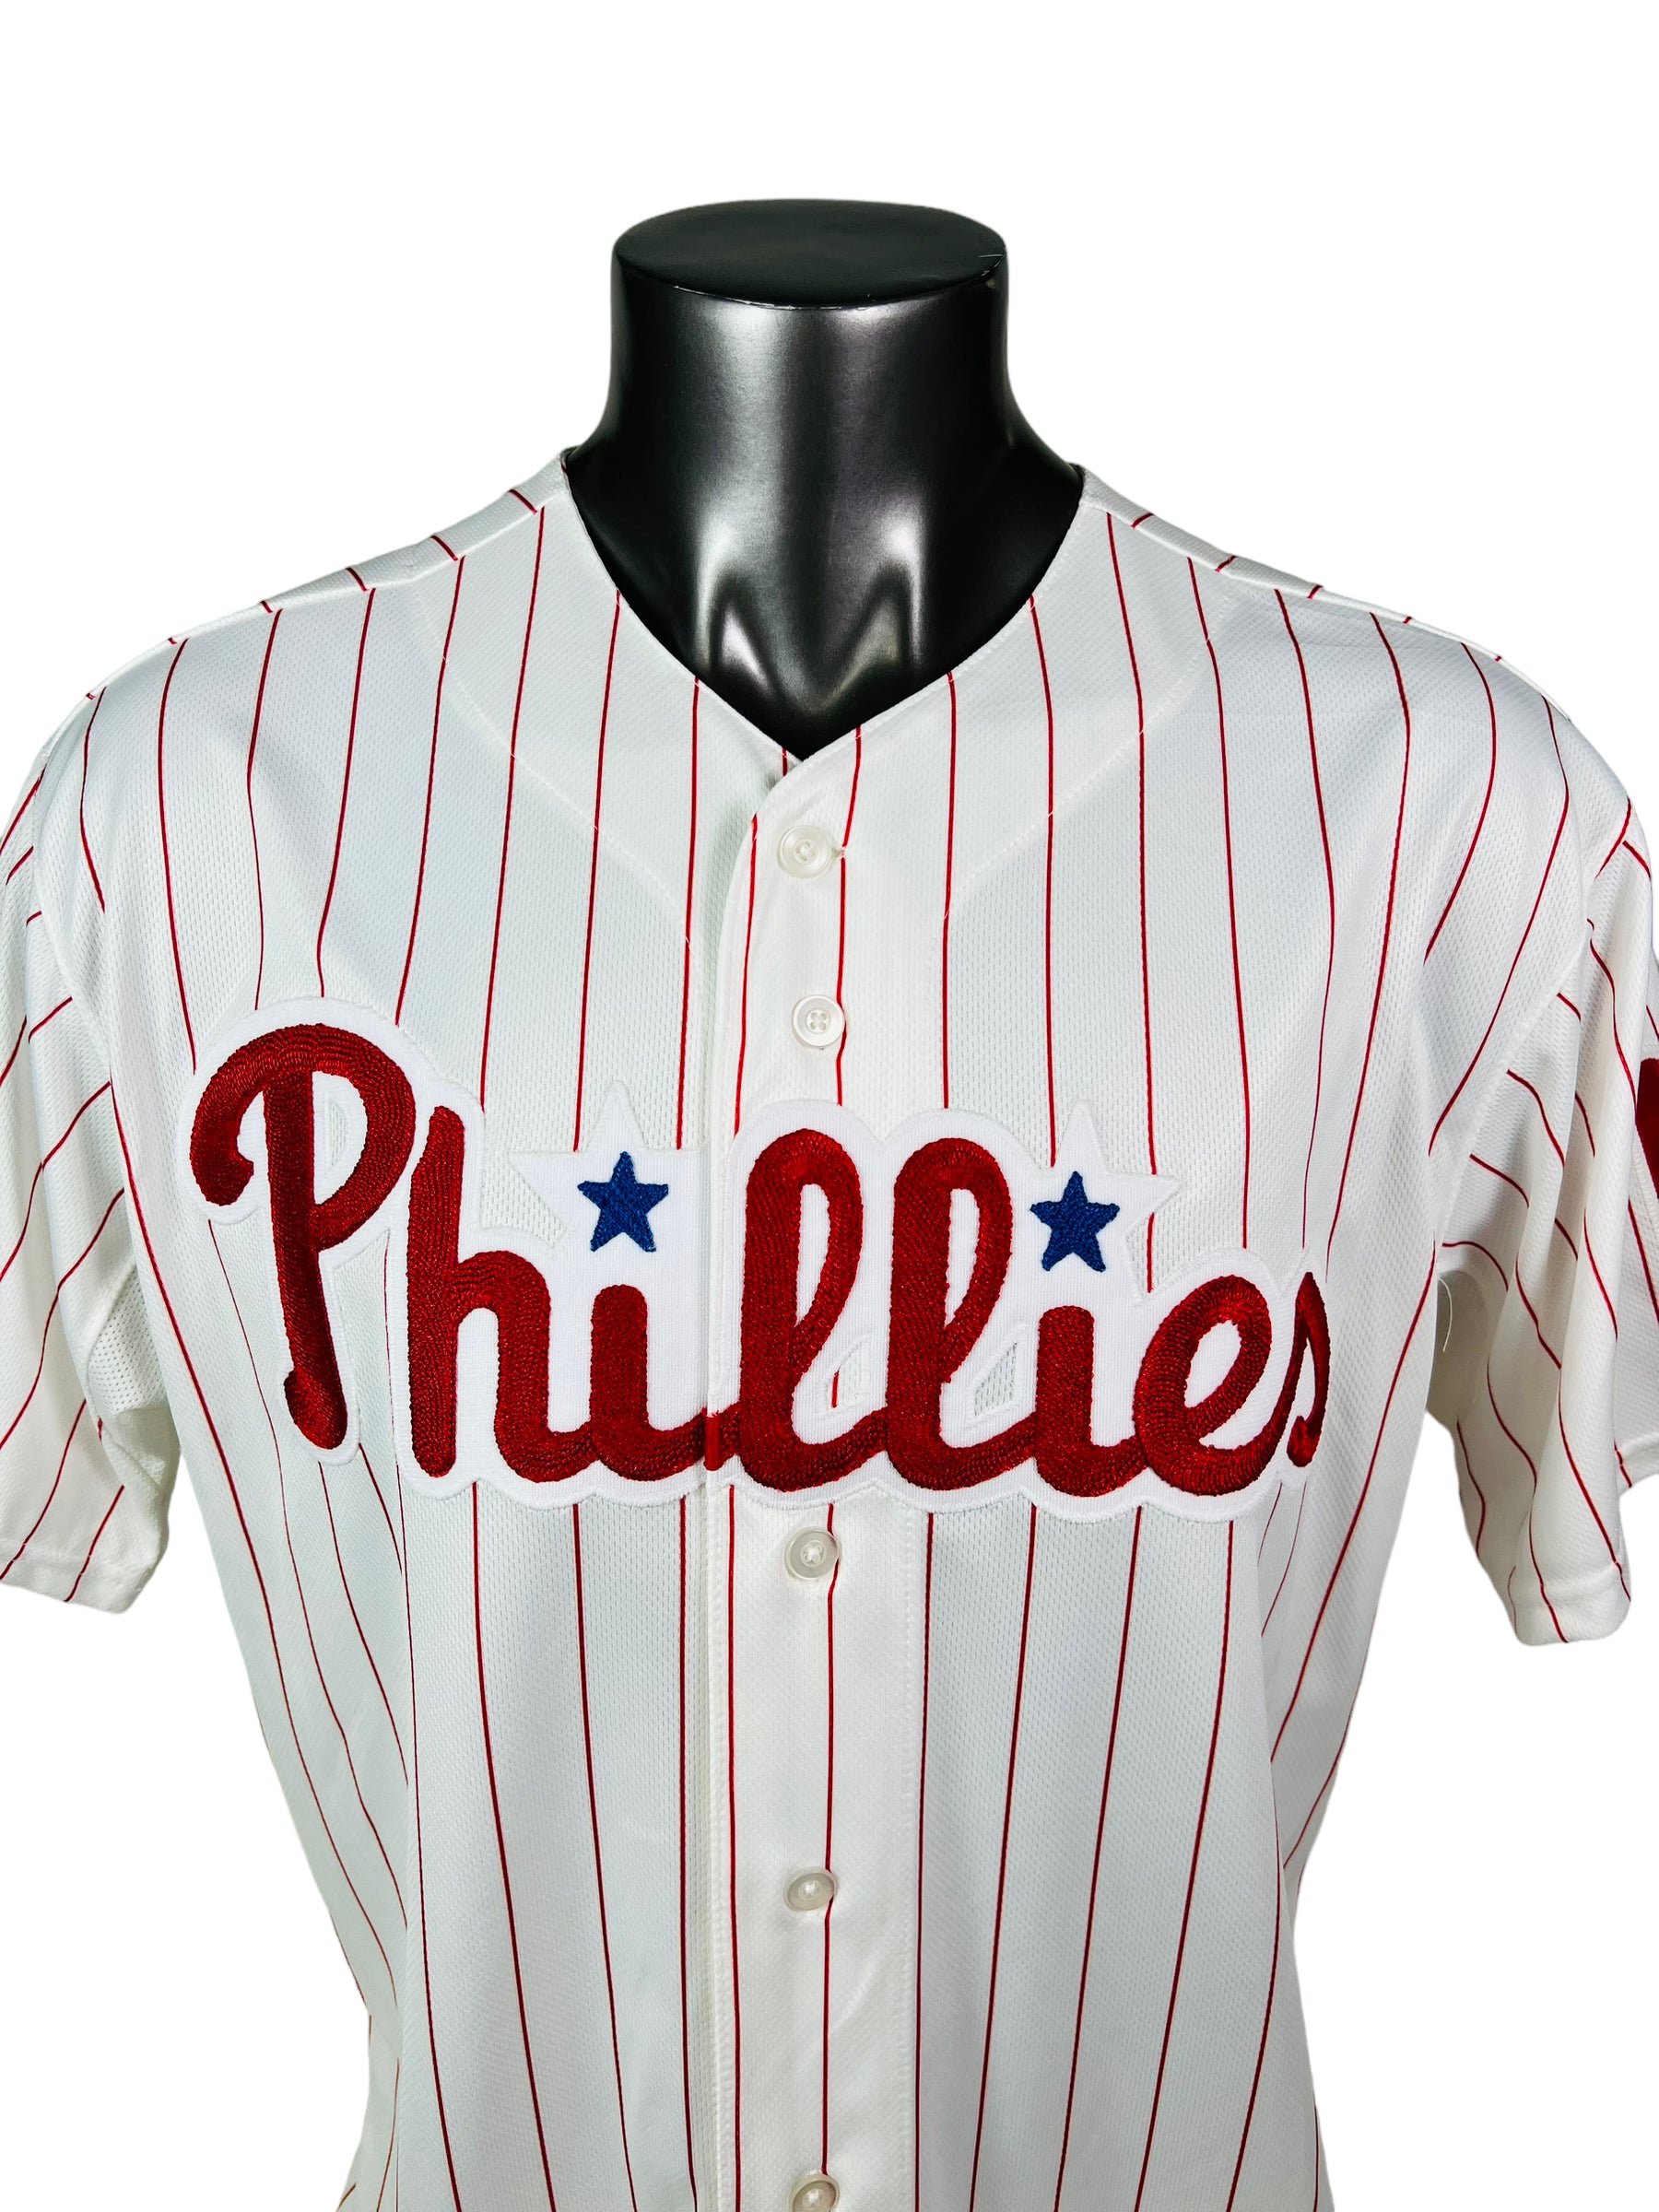 Philadelphia Phillies MLB baseball jersey